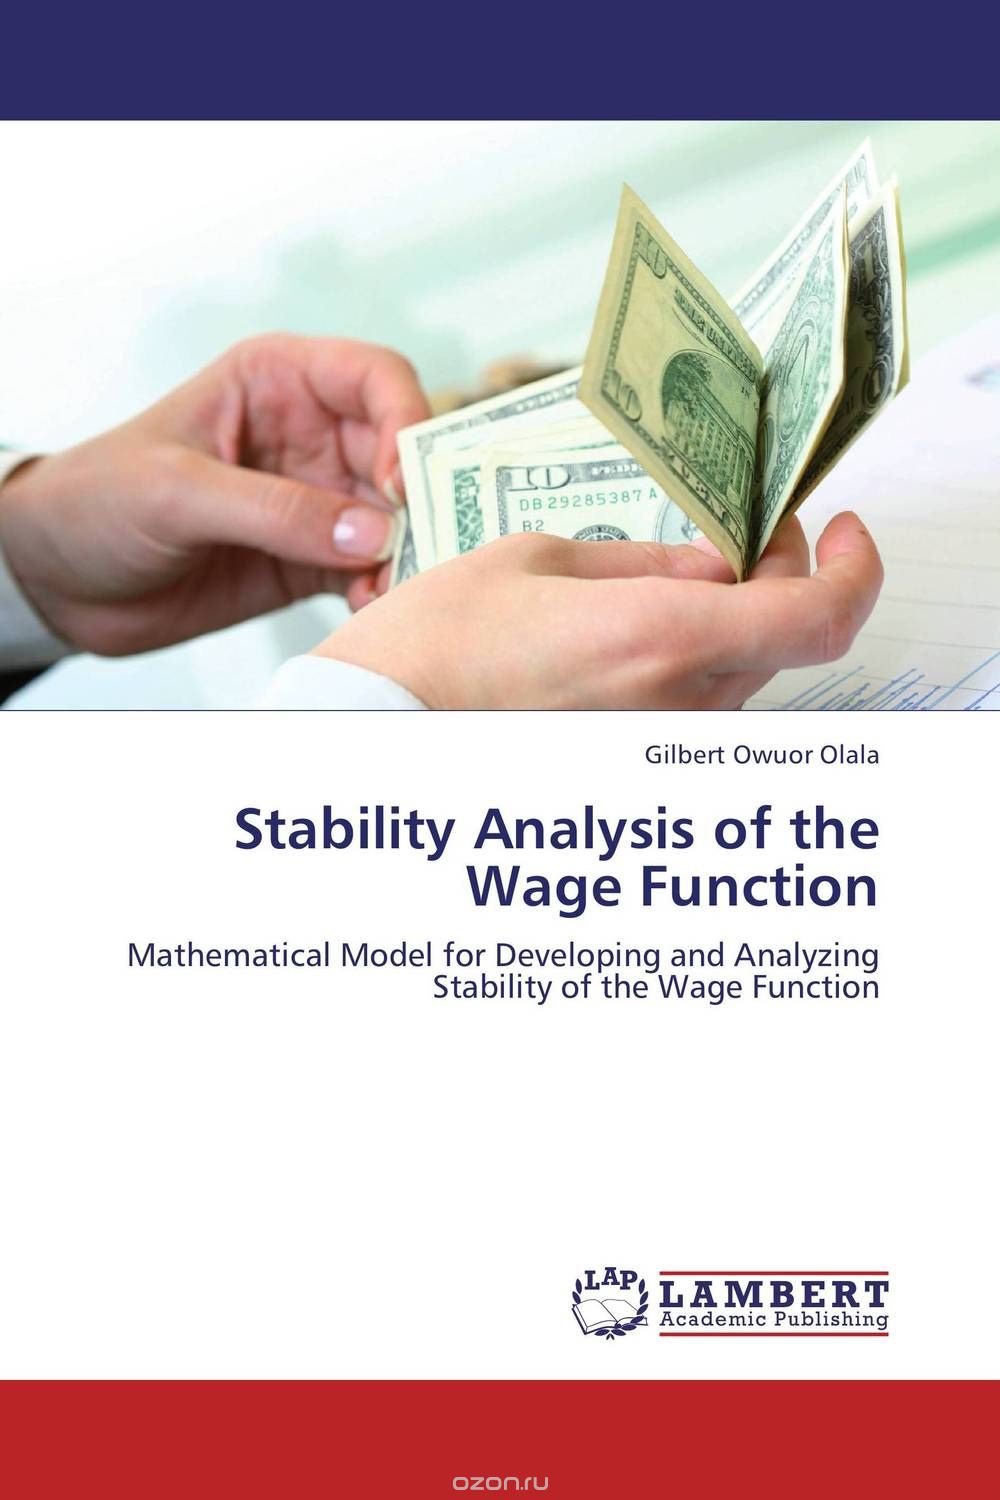 Скачать книгу "Stability Analysis of the Wage Function"